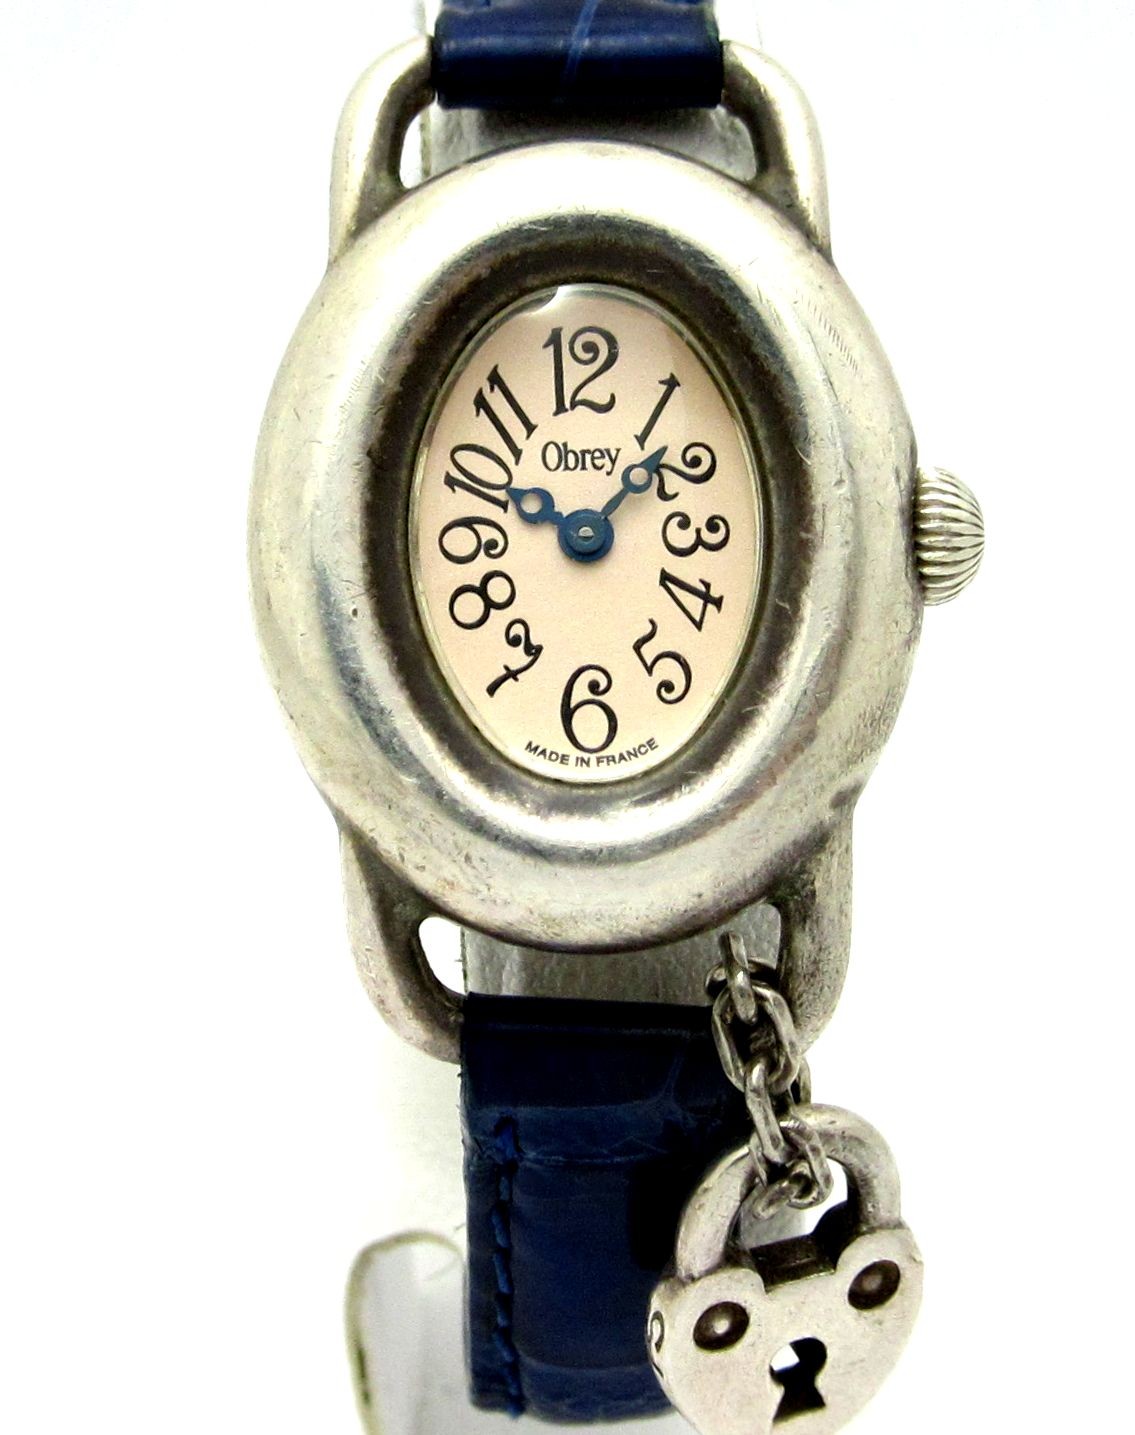 Obrey ハンドメイド ソリッドシルバー 腕時計 フランス製-